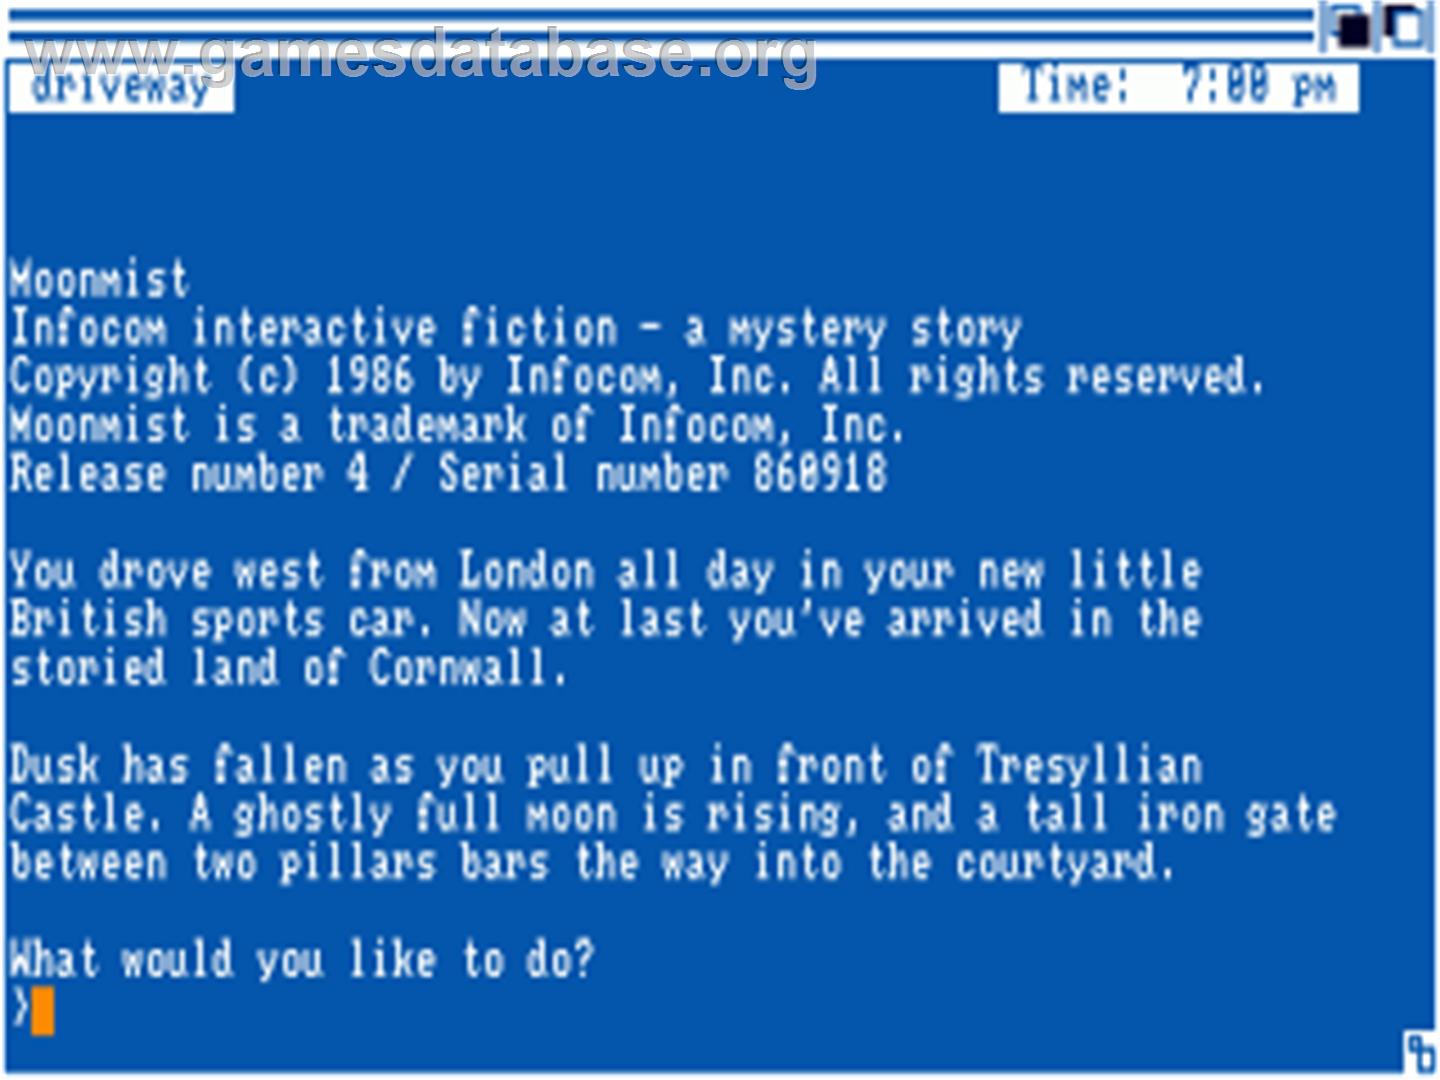 Moonmist - Commodore Amiga - Artwork - Title Screen